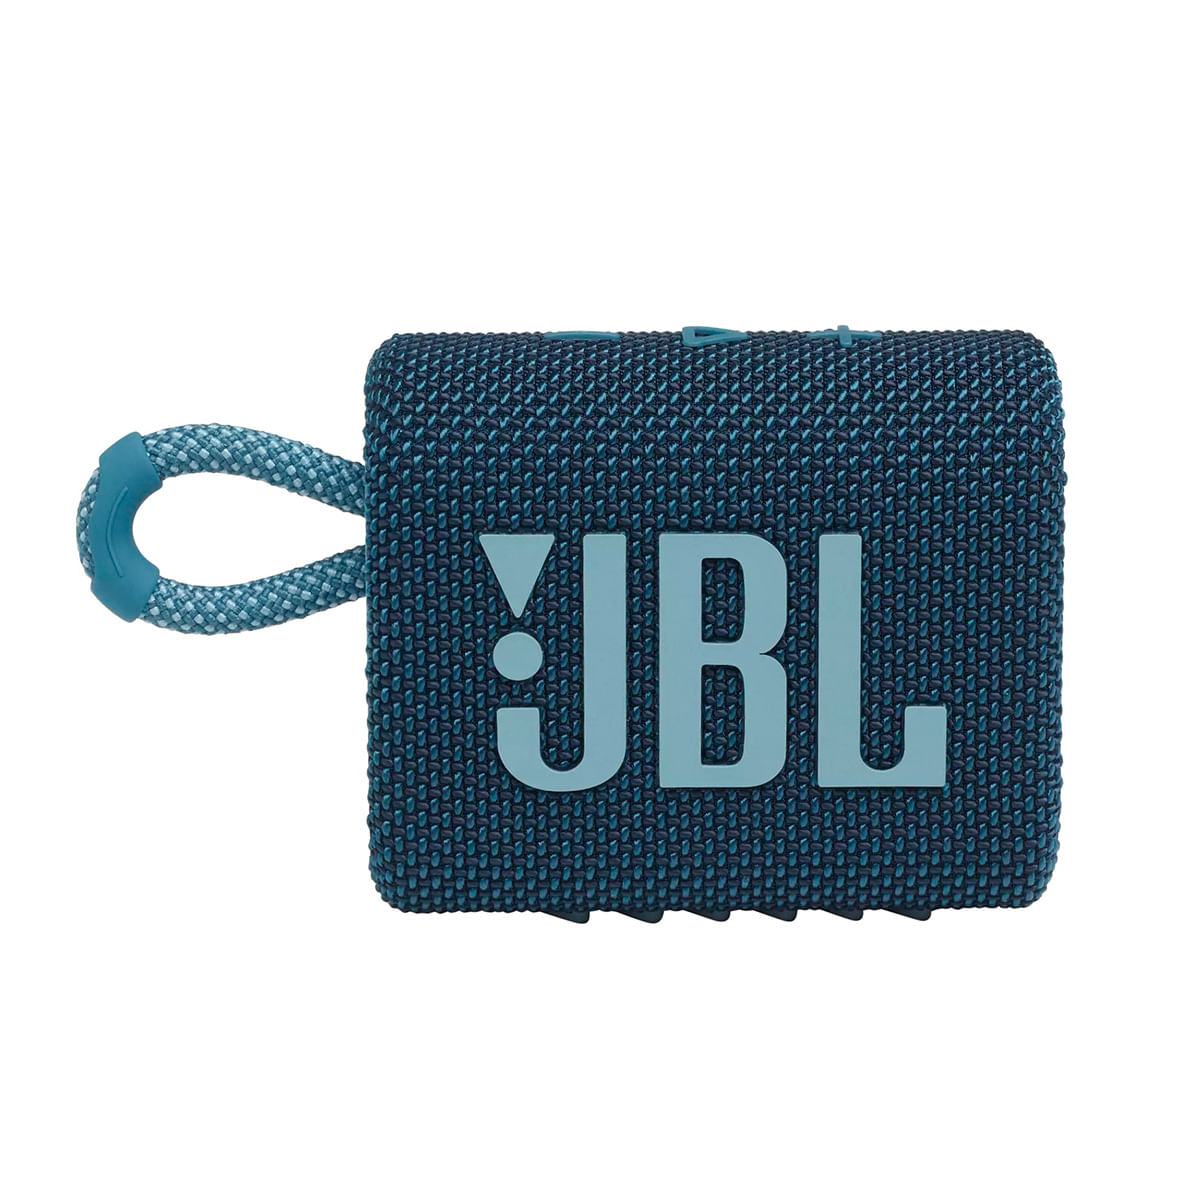 JBLGO3-Azul-Frente01